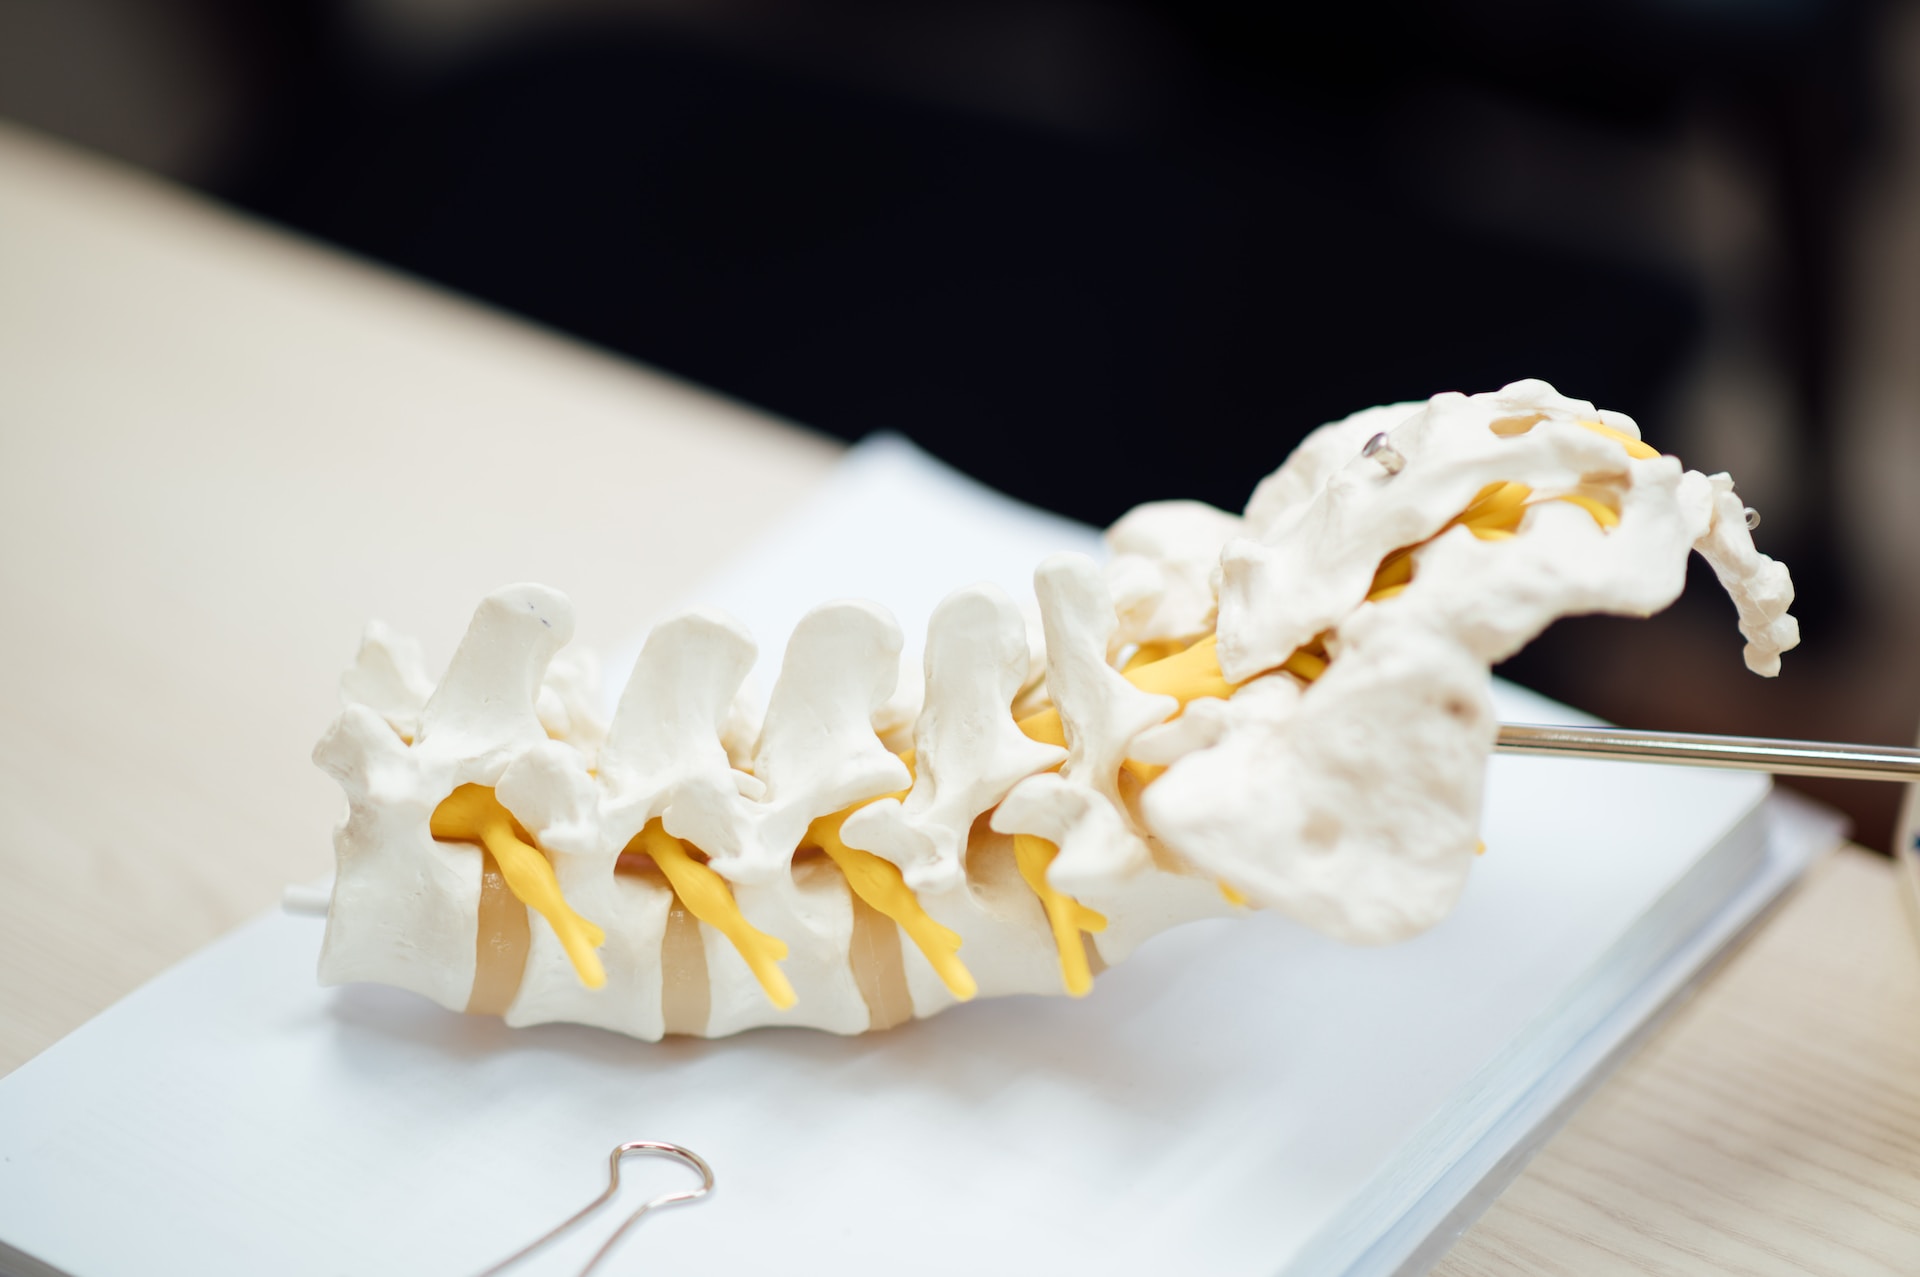 3D model of a spine